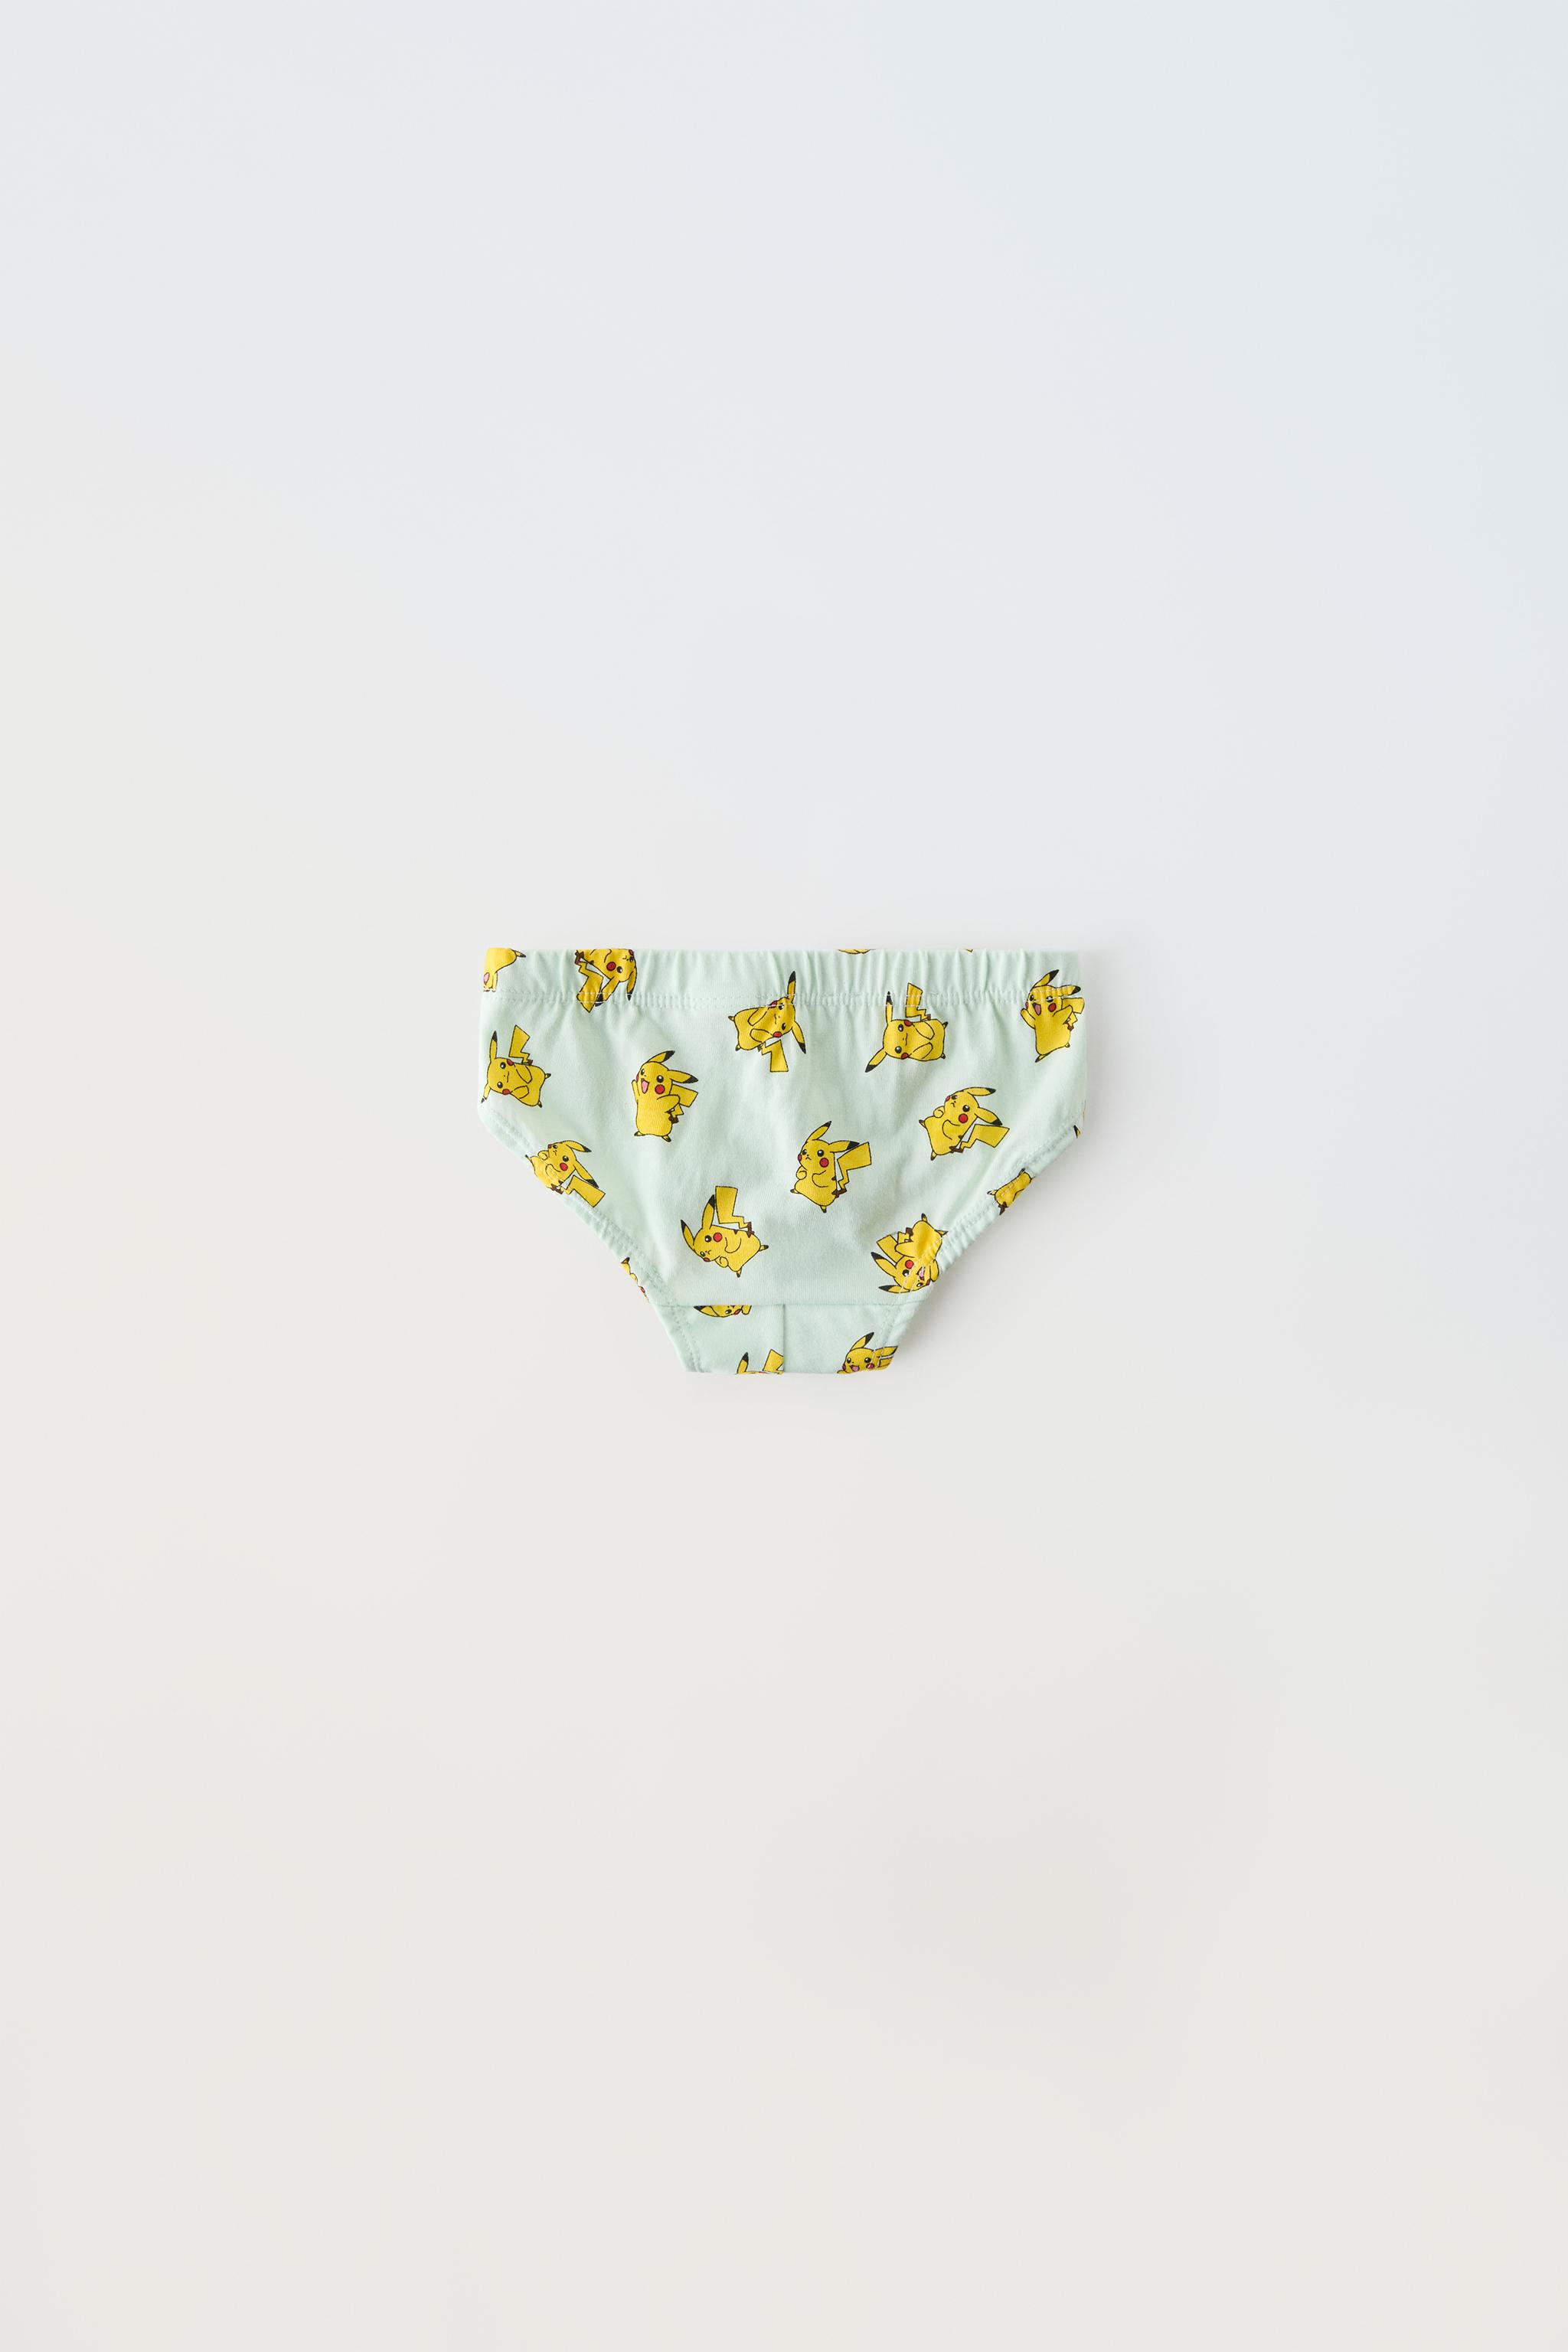 Pokemon Underwear Knickers Thong Beautiful Gift Present Womens Designer  Little Cute Soft Pikachu Cartoon Design Panties -  Canada